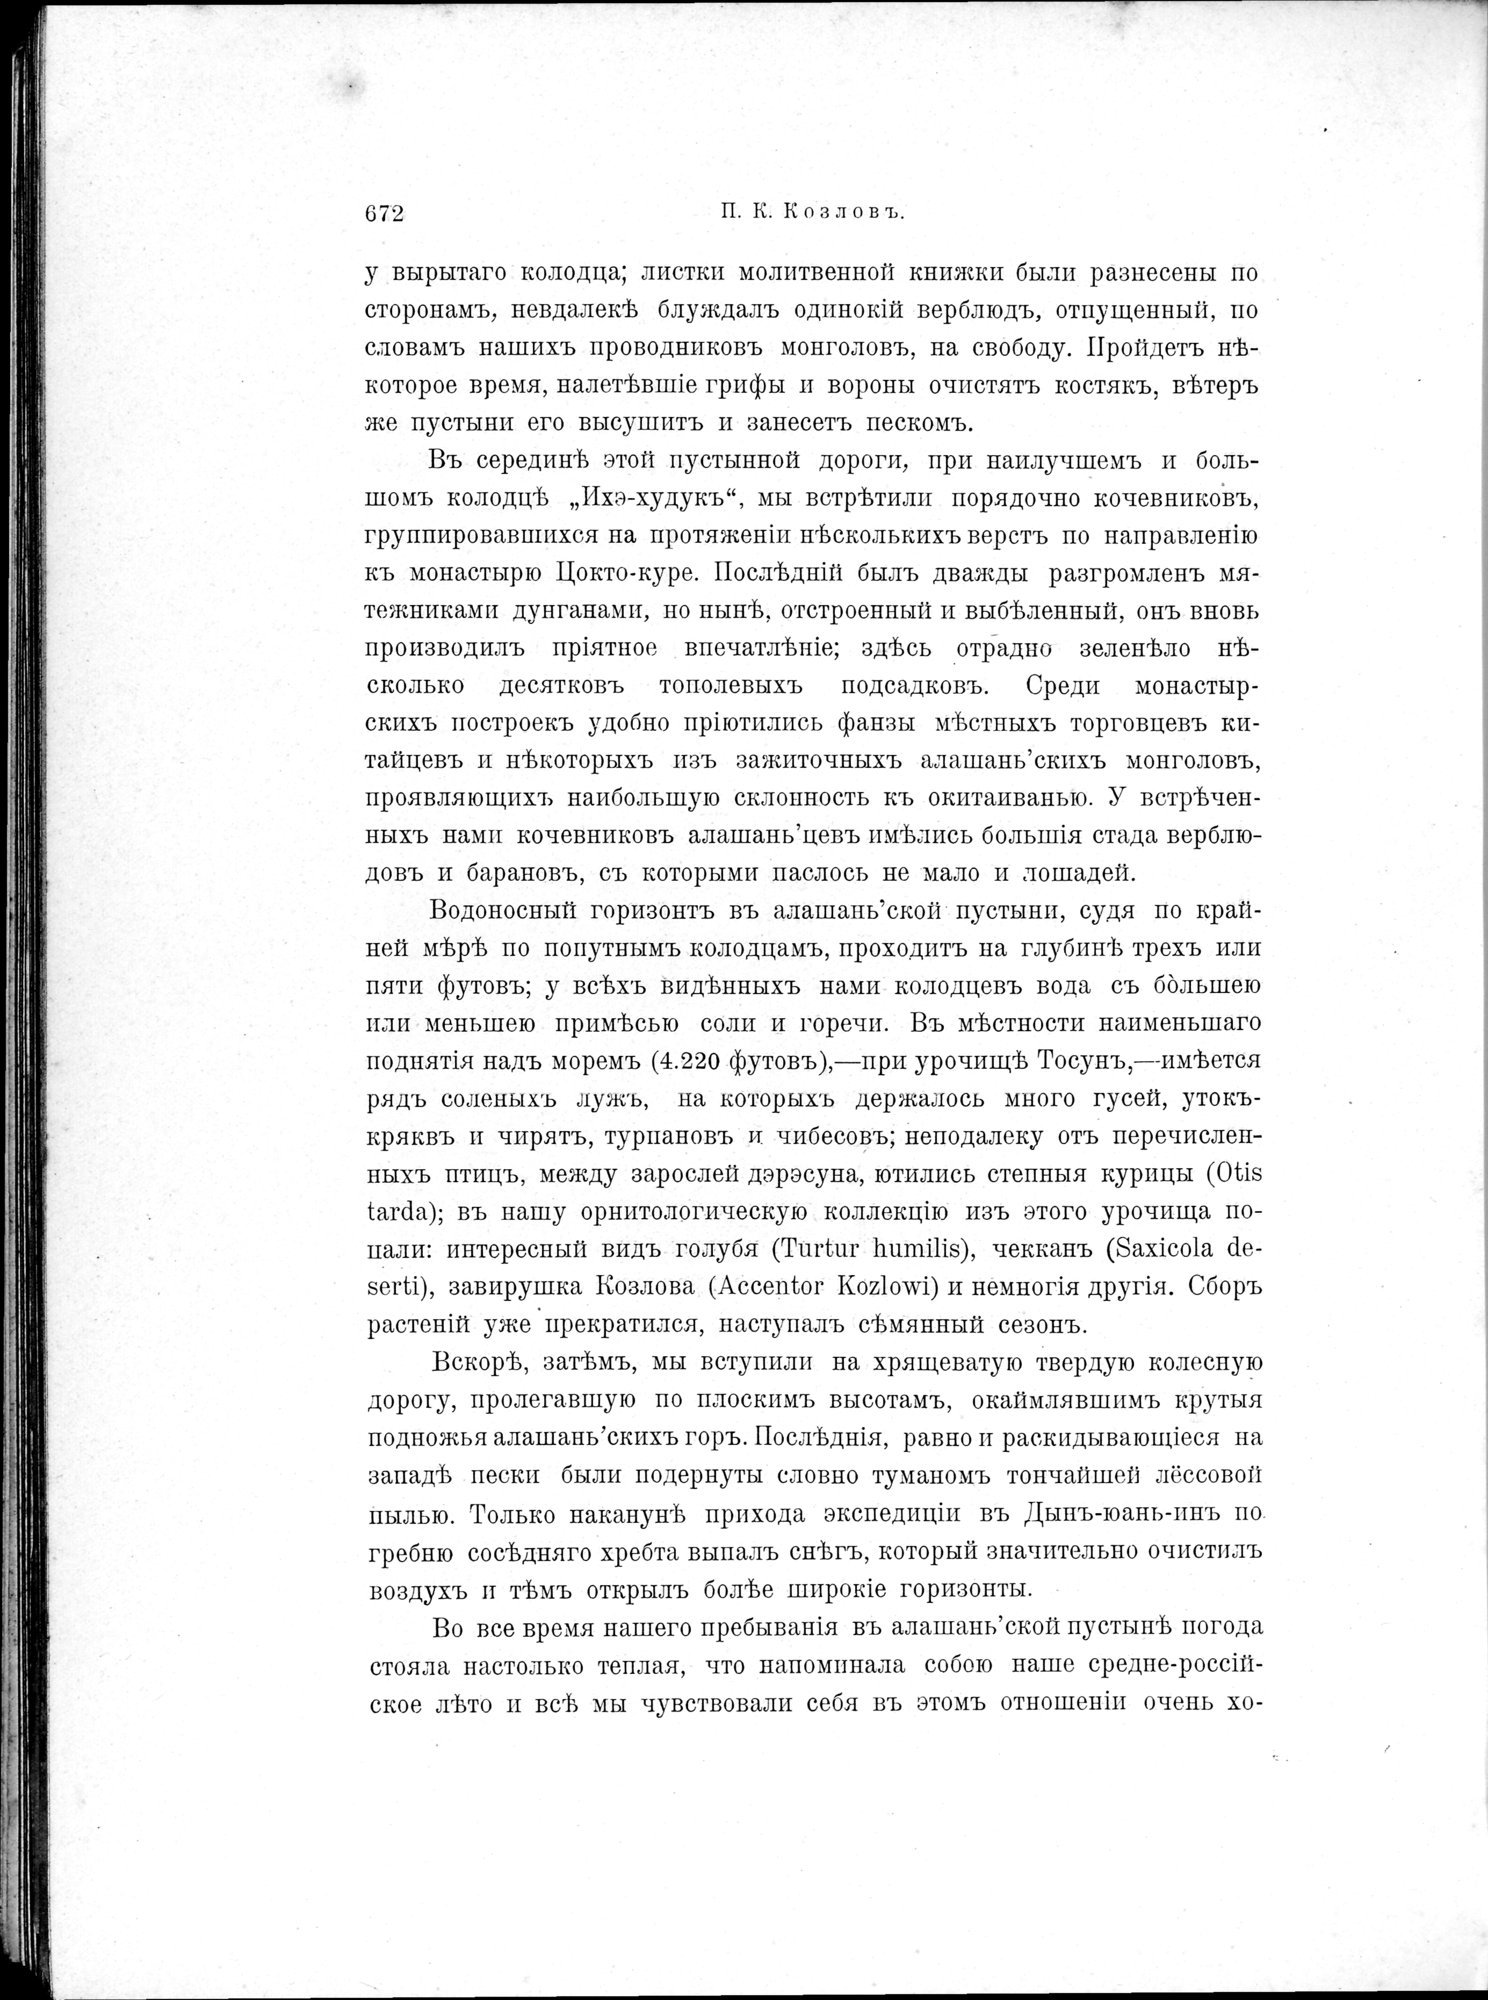 Mongoliia i Kam : vol.2 / Page 506 (Grayscale High Resolution Image)